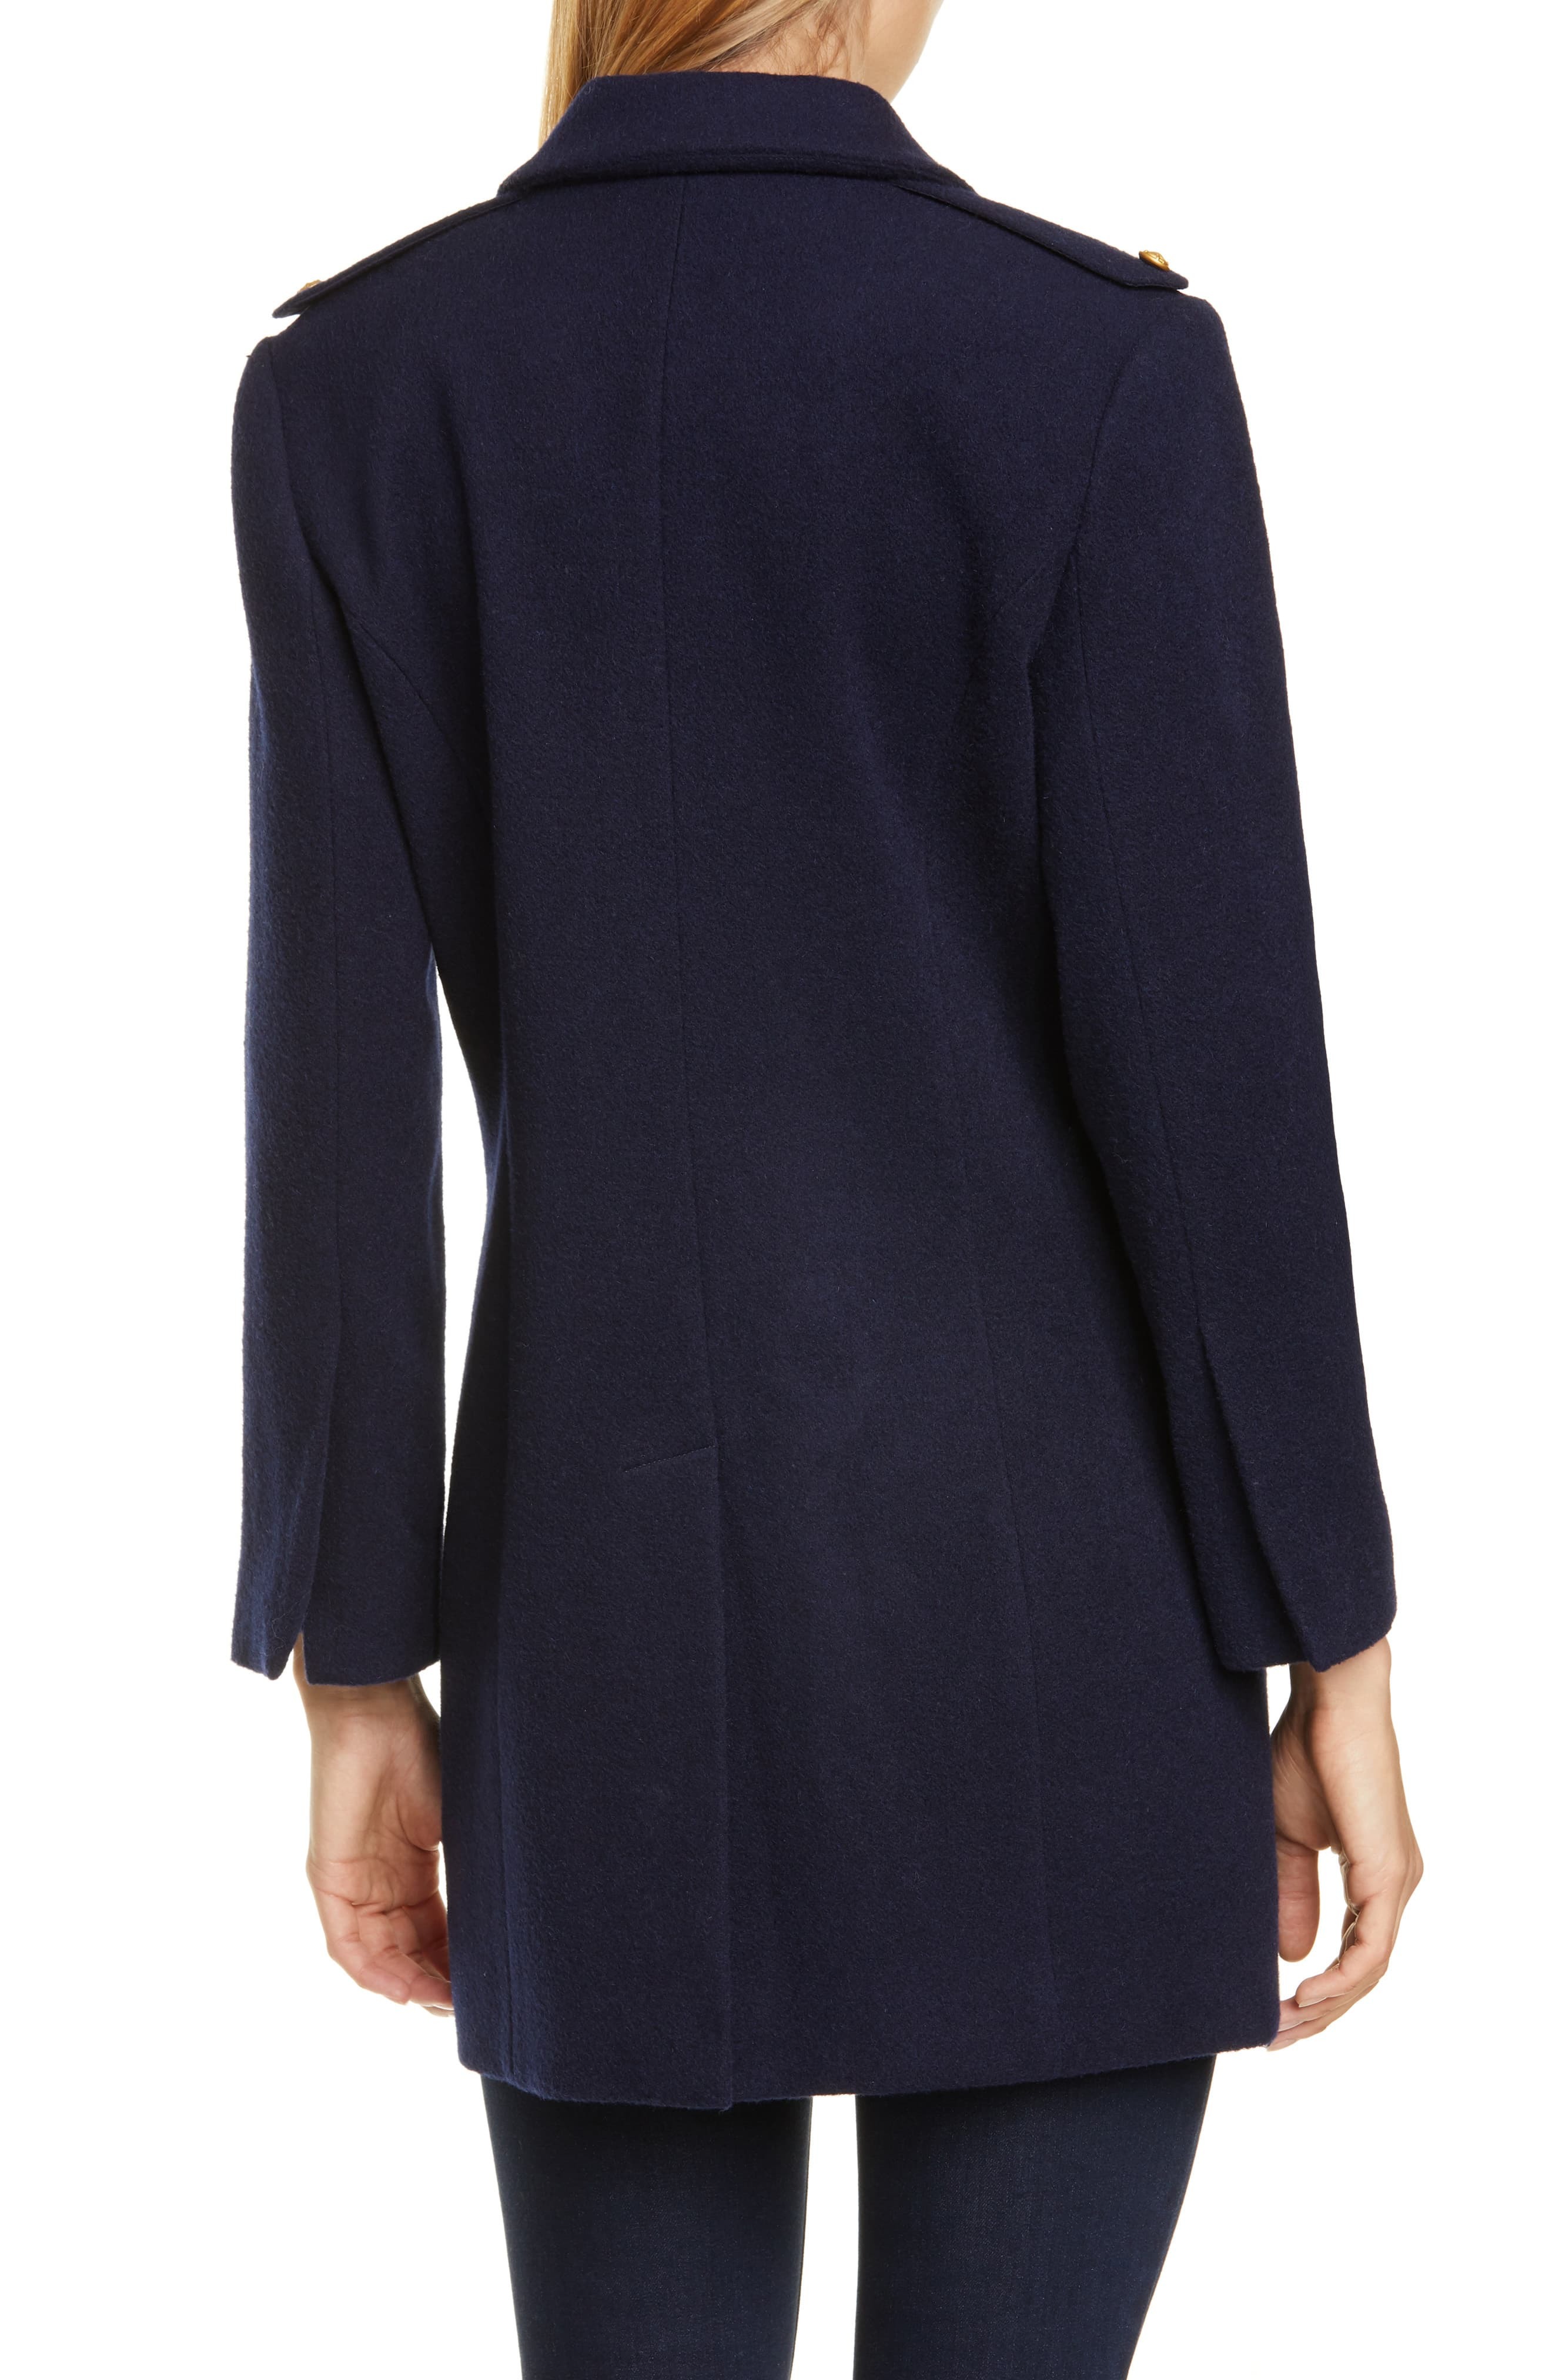 L'Agence Emmi Wool Blend Peacoat, $289 | Nordstrom | Lookastic